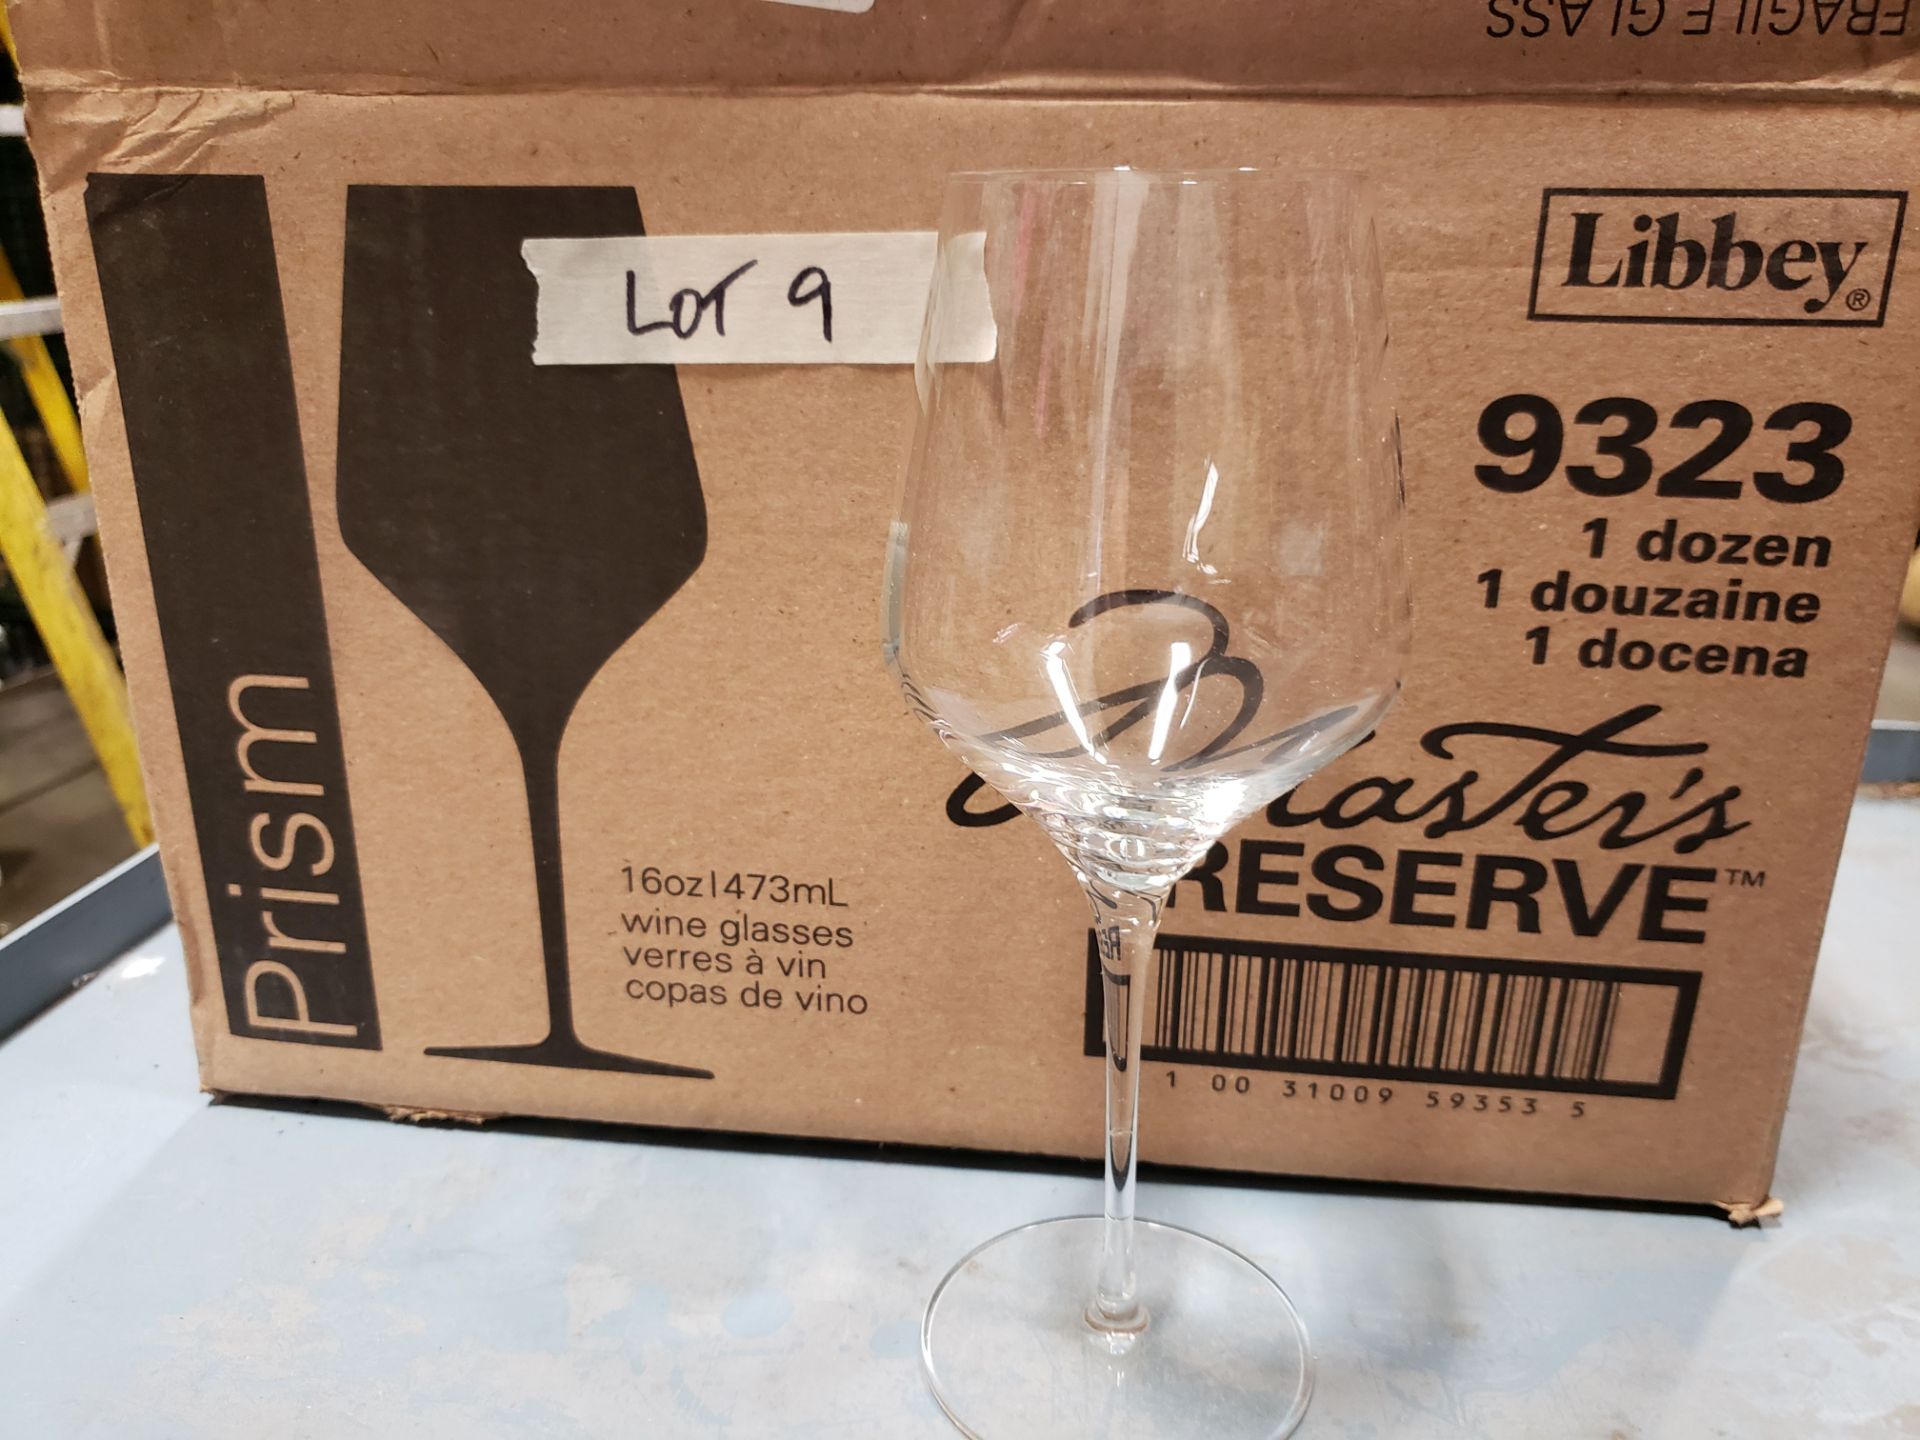 Libbey Master Reserve 16oz Wine Glasses - Lot of 10